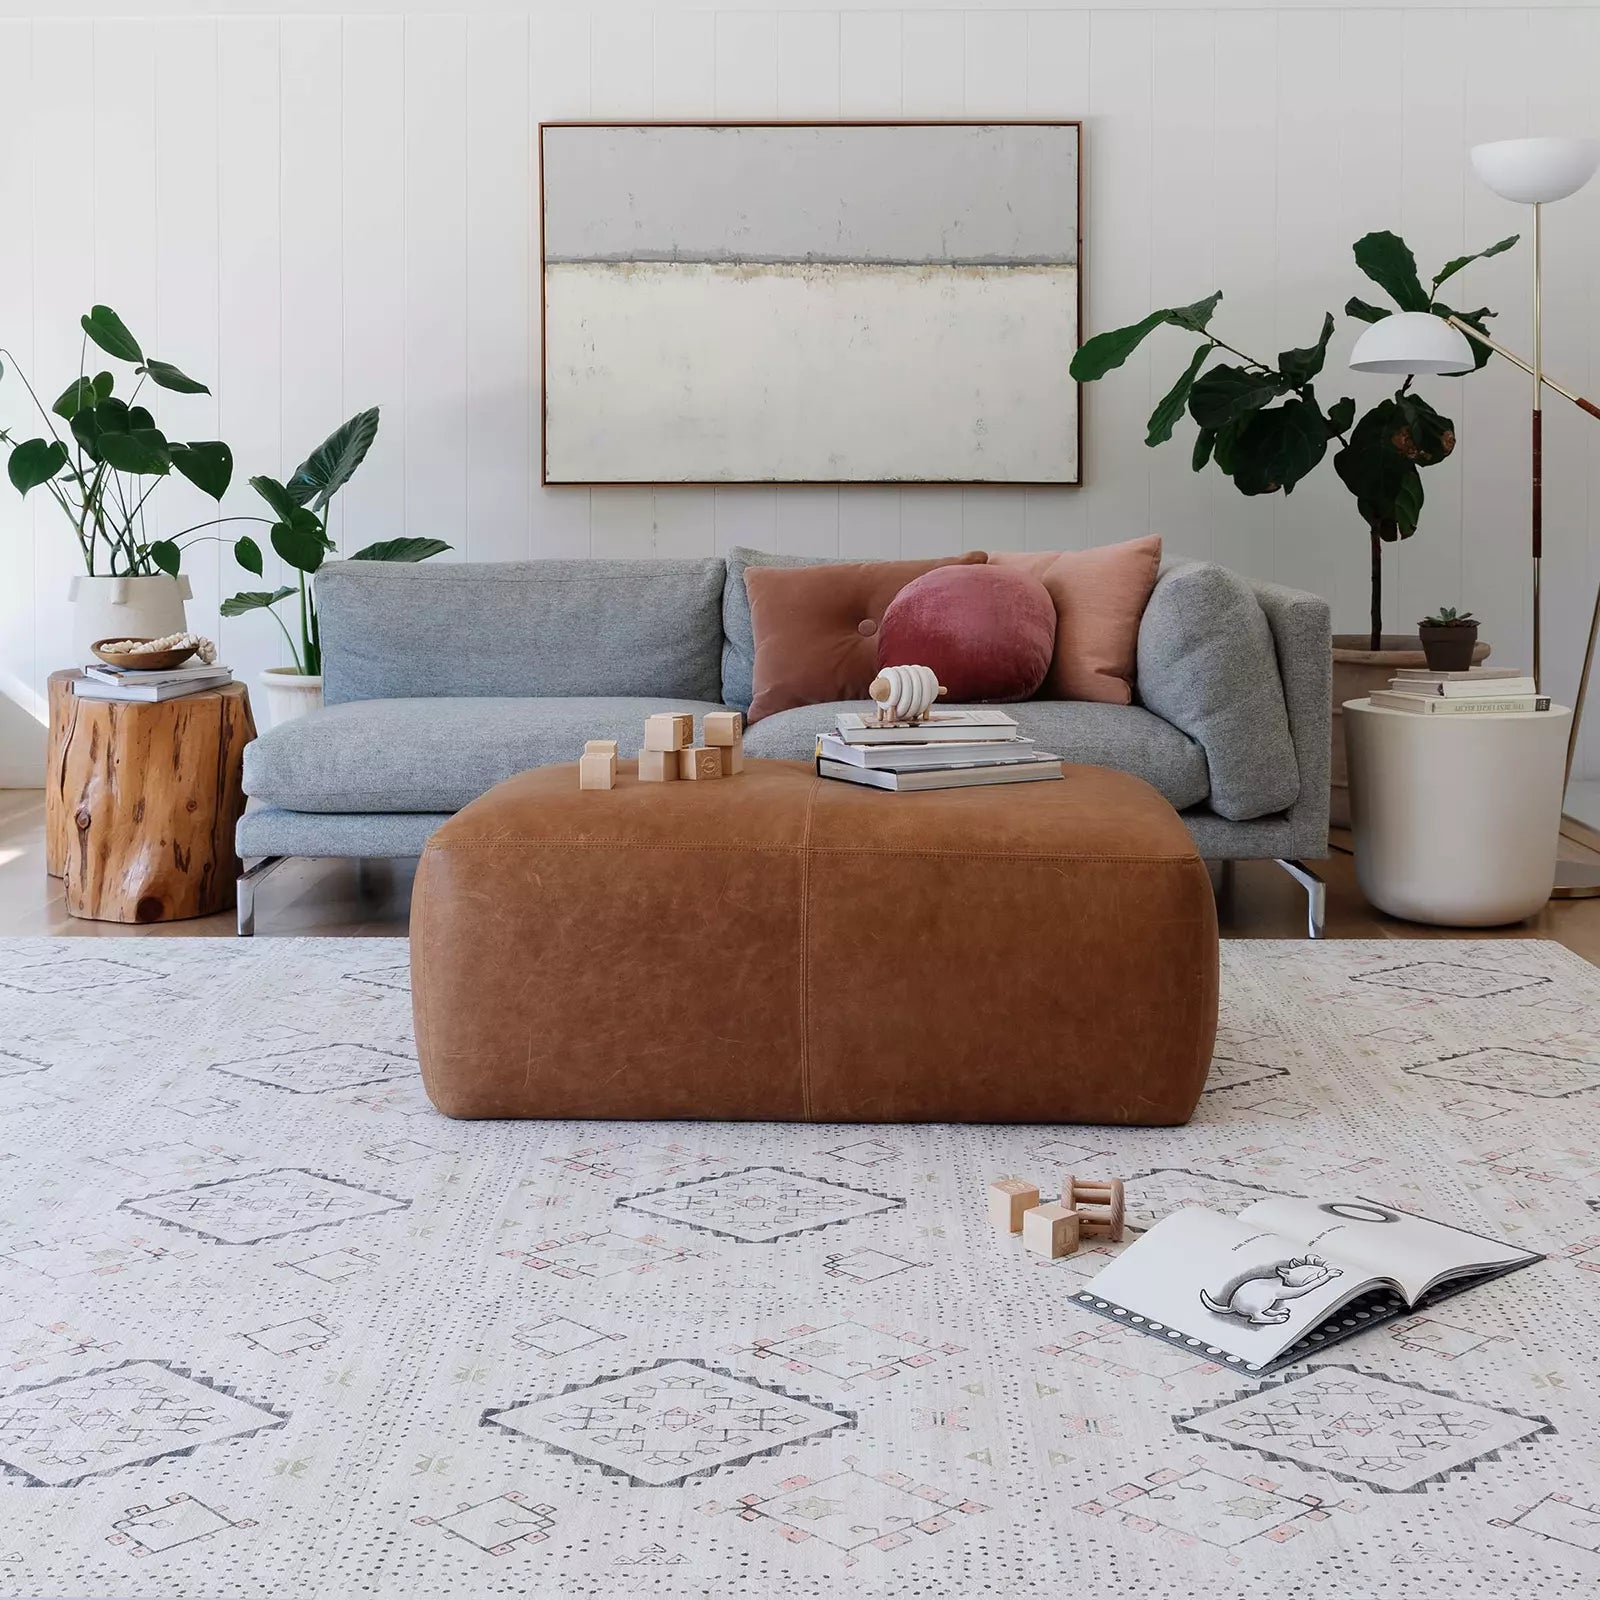 Oat Neutral Beige Minimal Boho Pattern play mat in living room